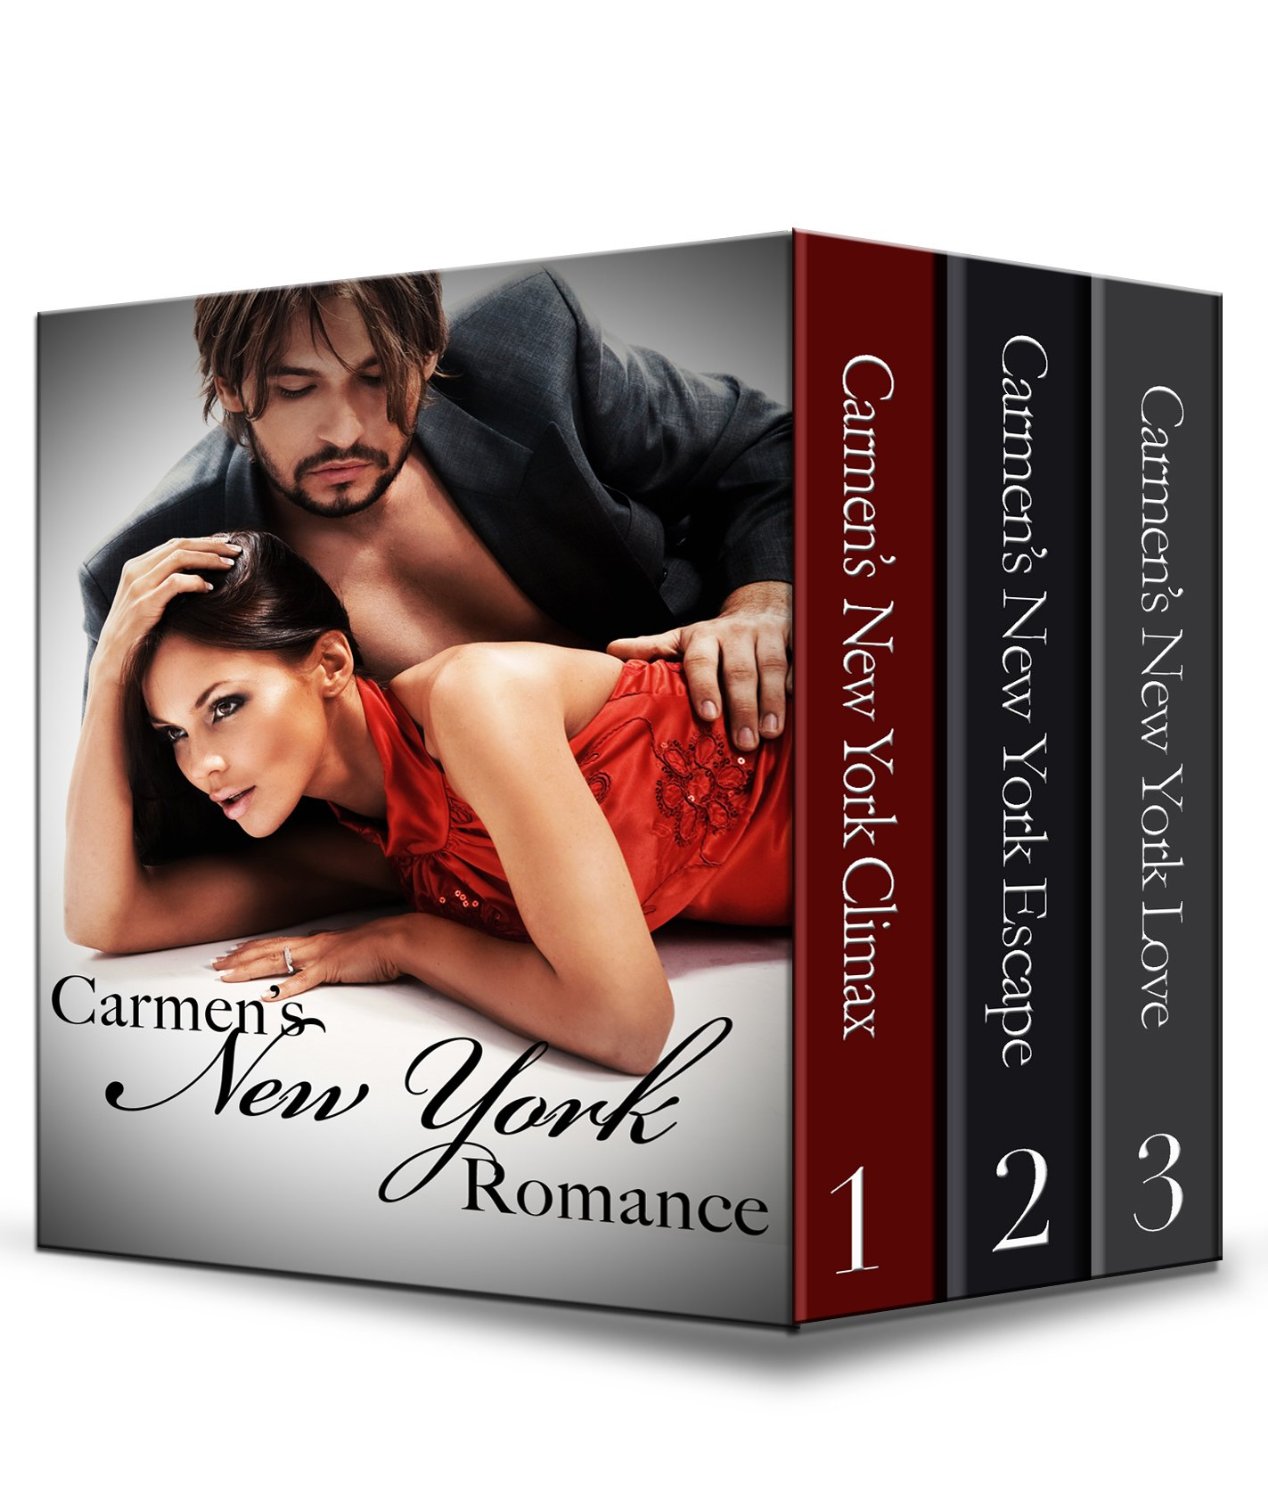 Carmen's New York Romance